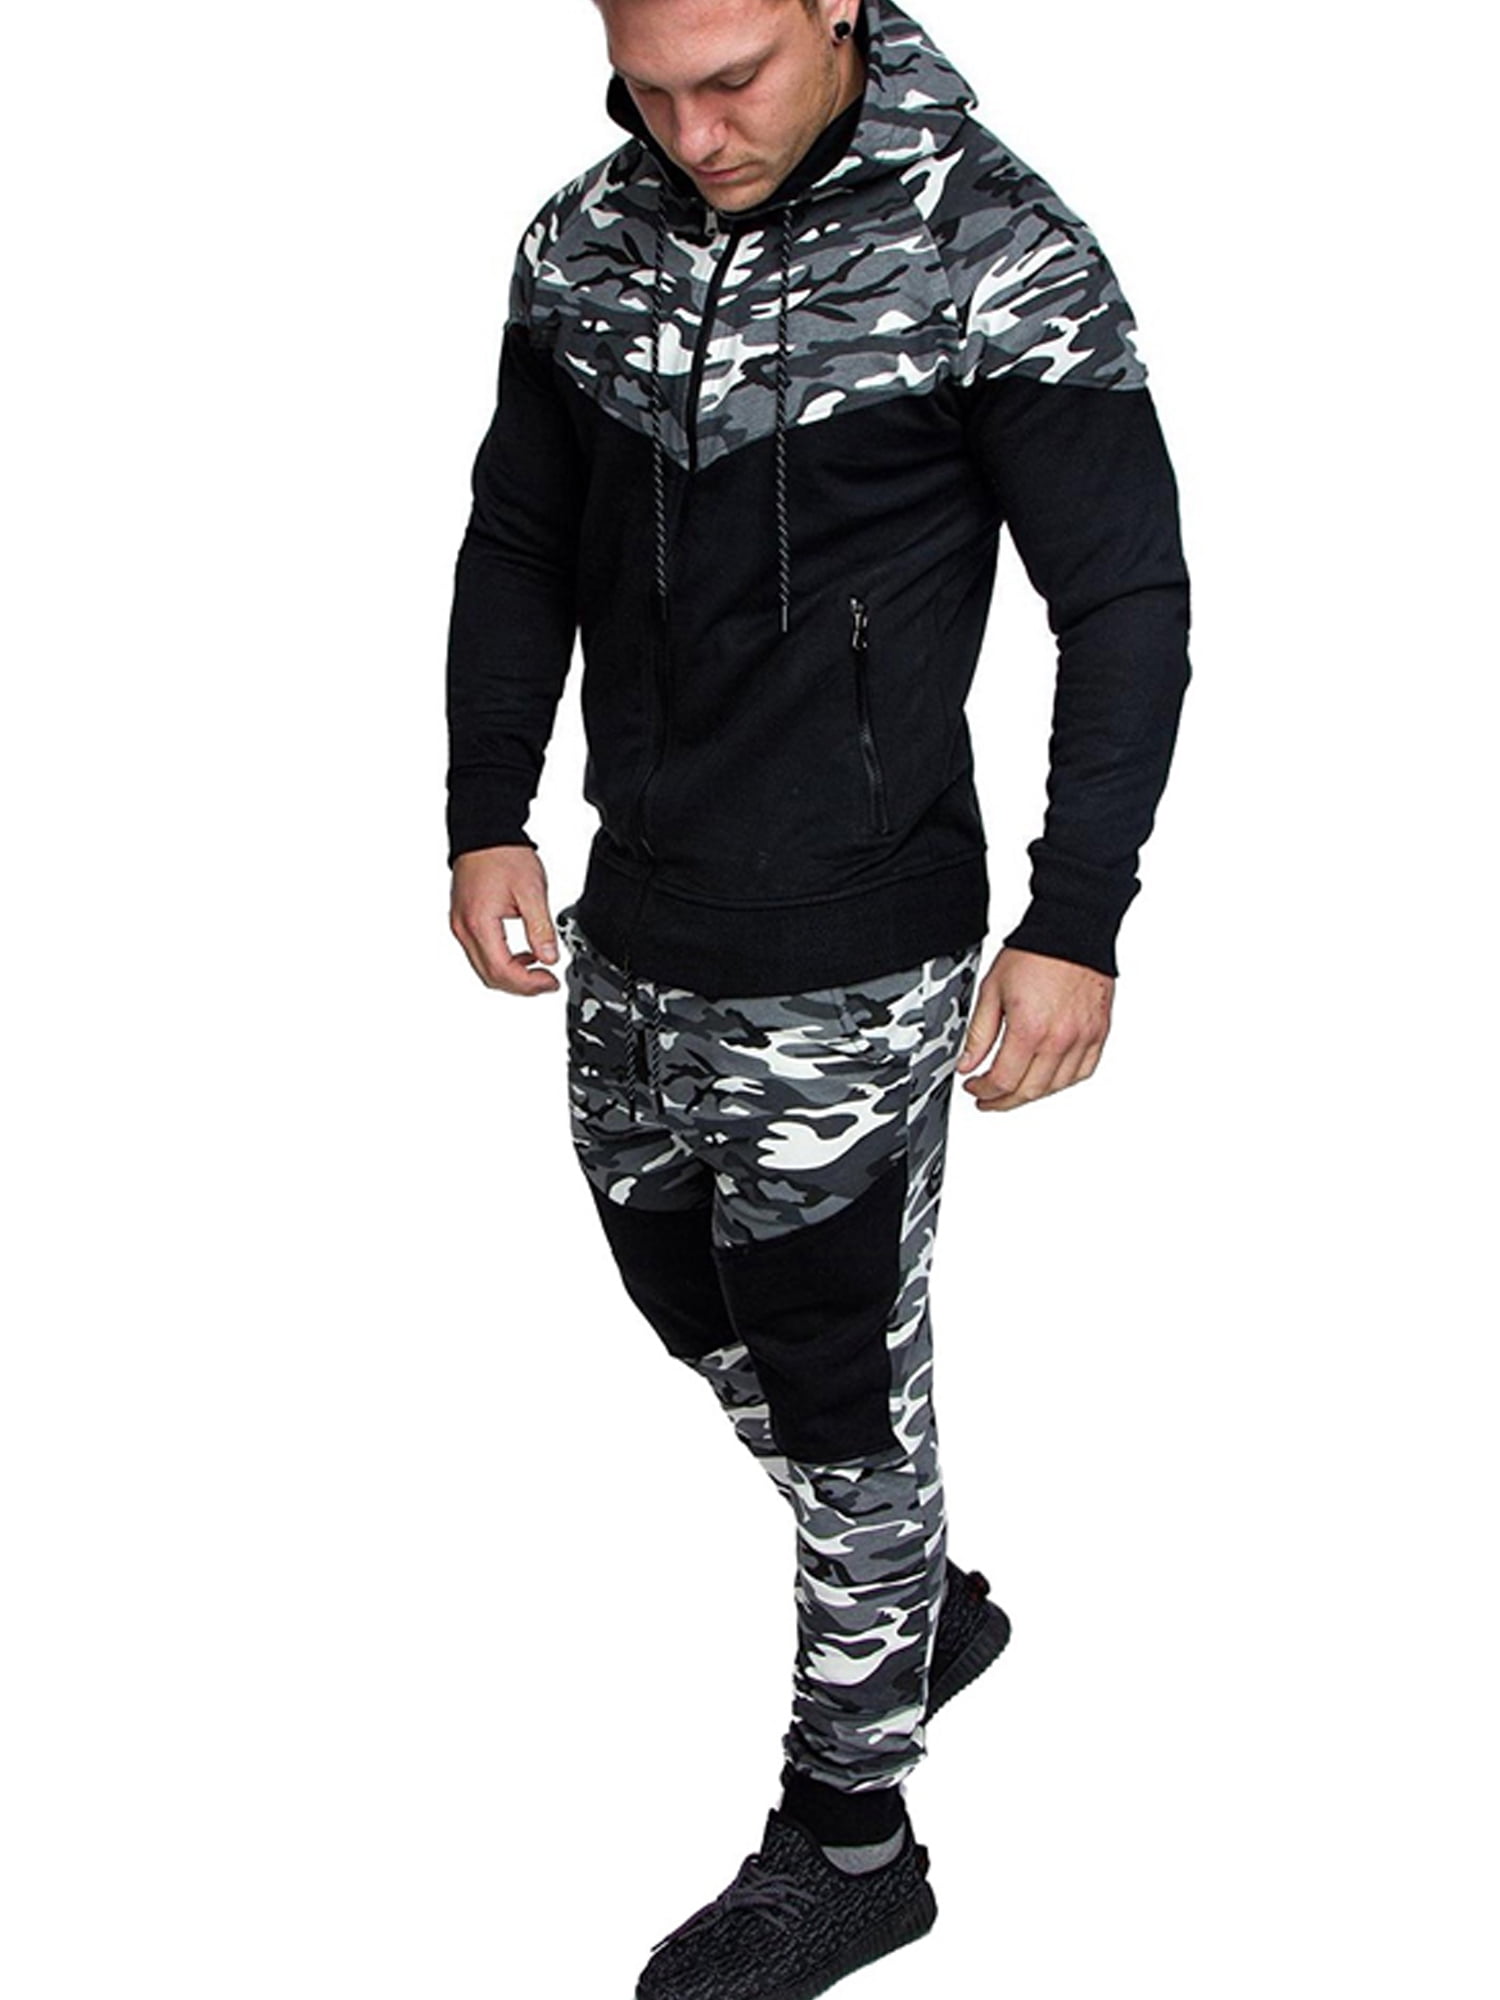 Litetao Mens Full Zip Tracksuit Set Casual Camouflage Jogging Athletic Sweatshirt Pants Set with Zipper Pocket 